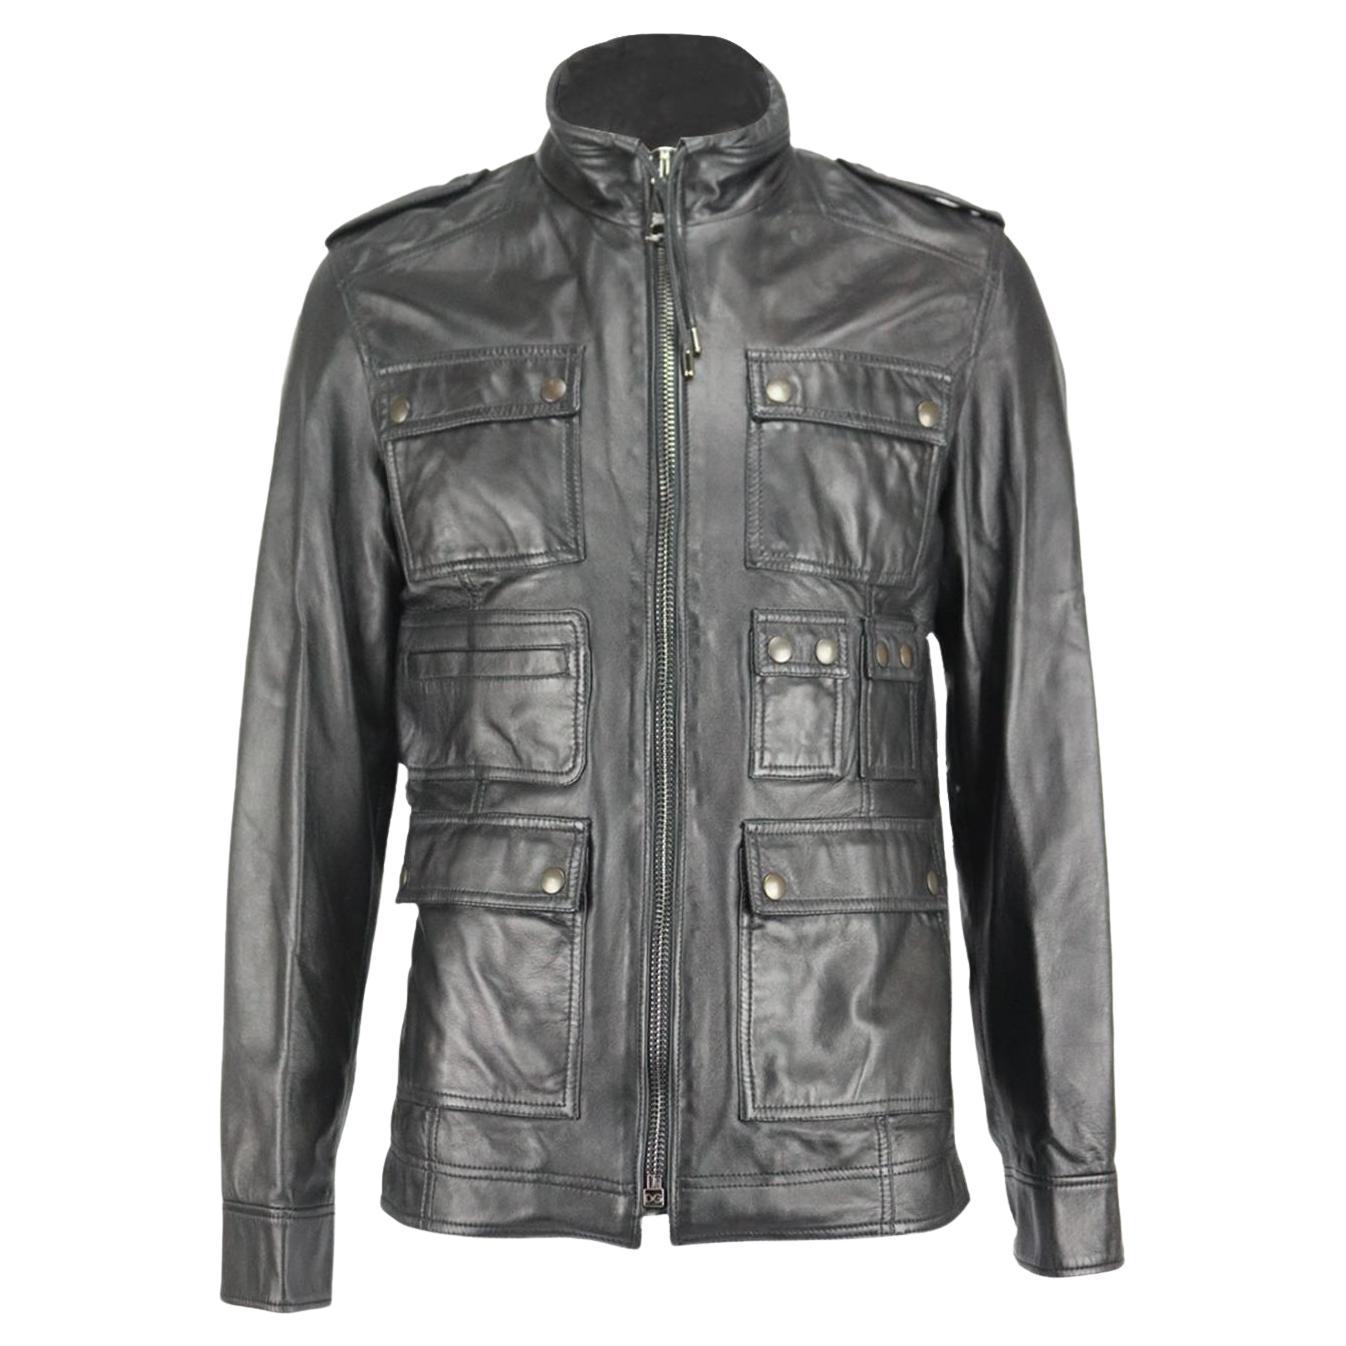 Brandslock Mens Leather Jacket Genuine Lambskin Moto Biker Slim fit , Black 4XL - Fits Chest: 50-51